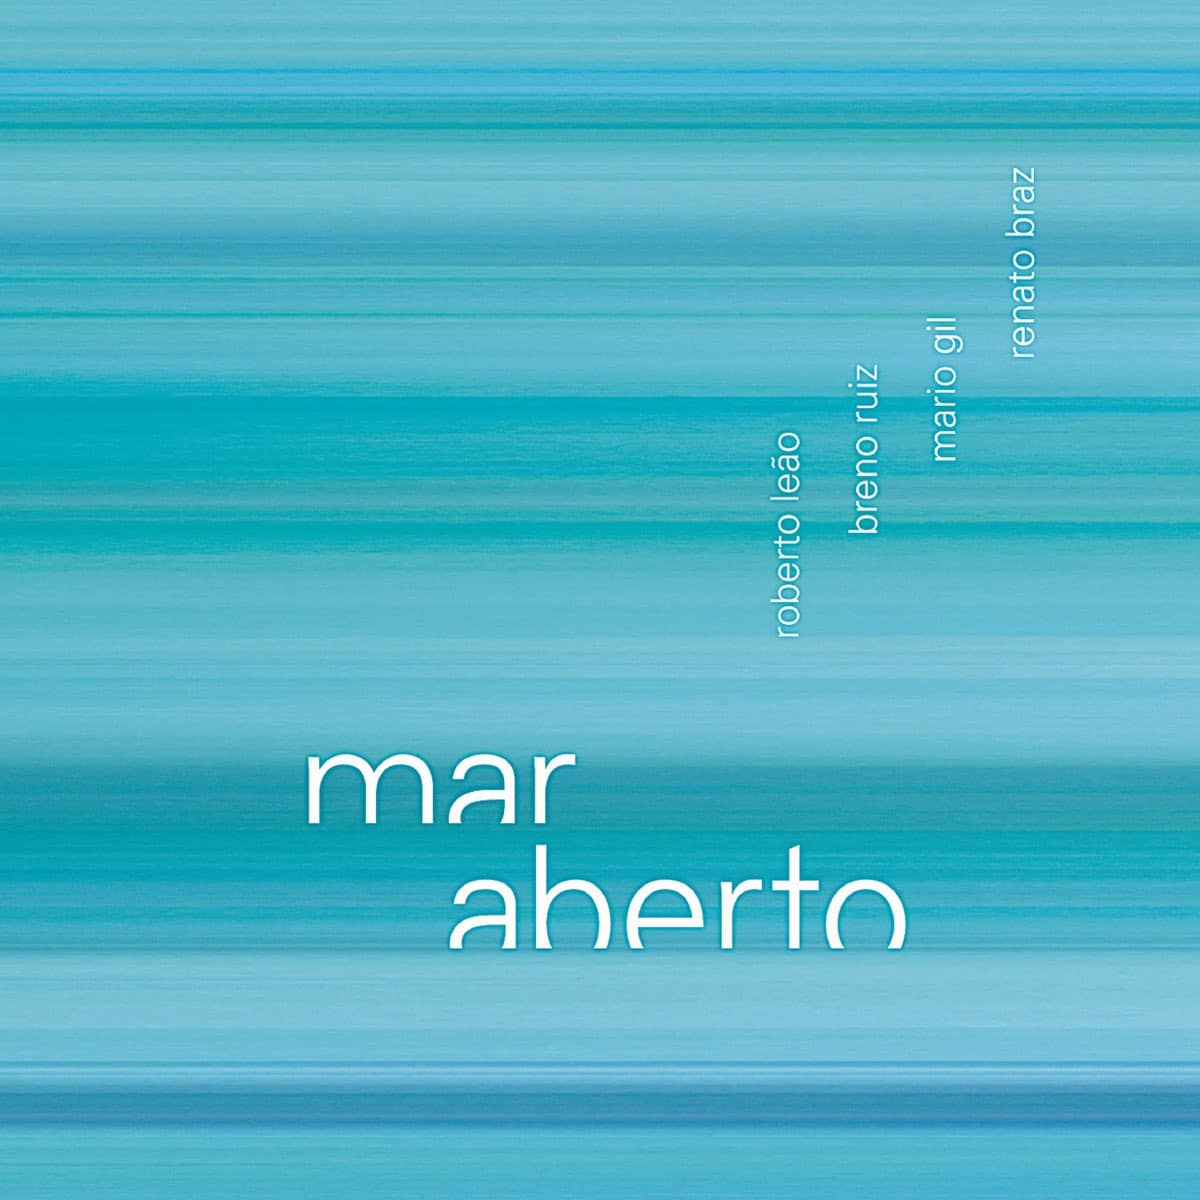 revistaprosaversoearte.com - 'Mar Aberto', álbum de Roberto Leão, Breno Ruiz, Mario Gil e Renato Braz